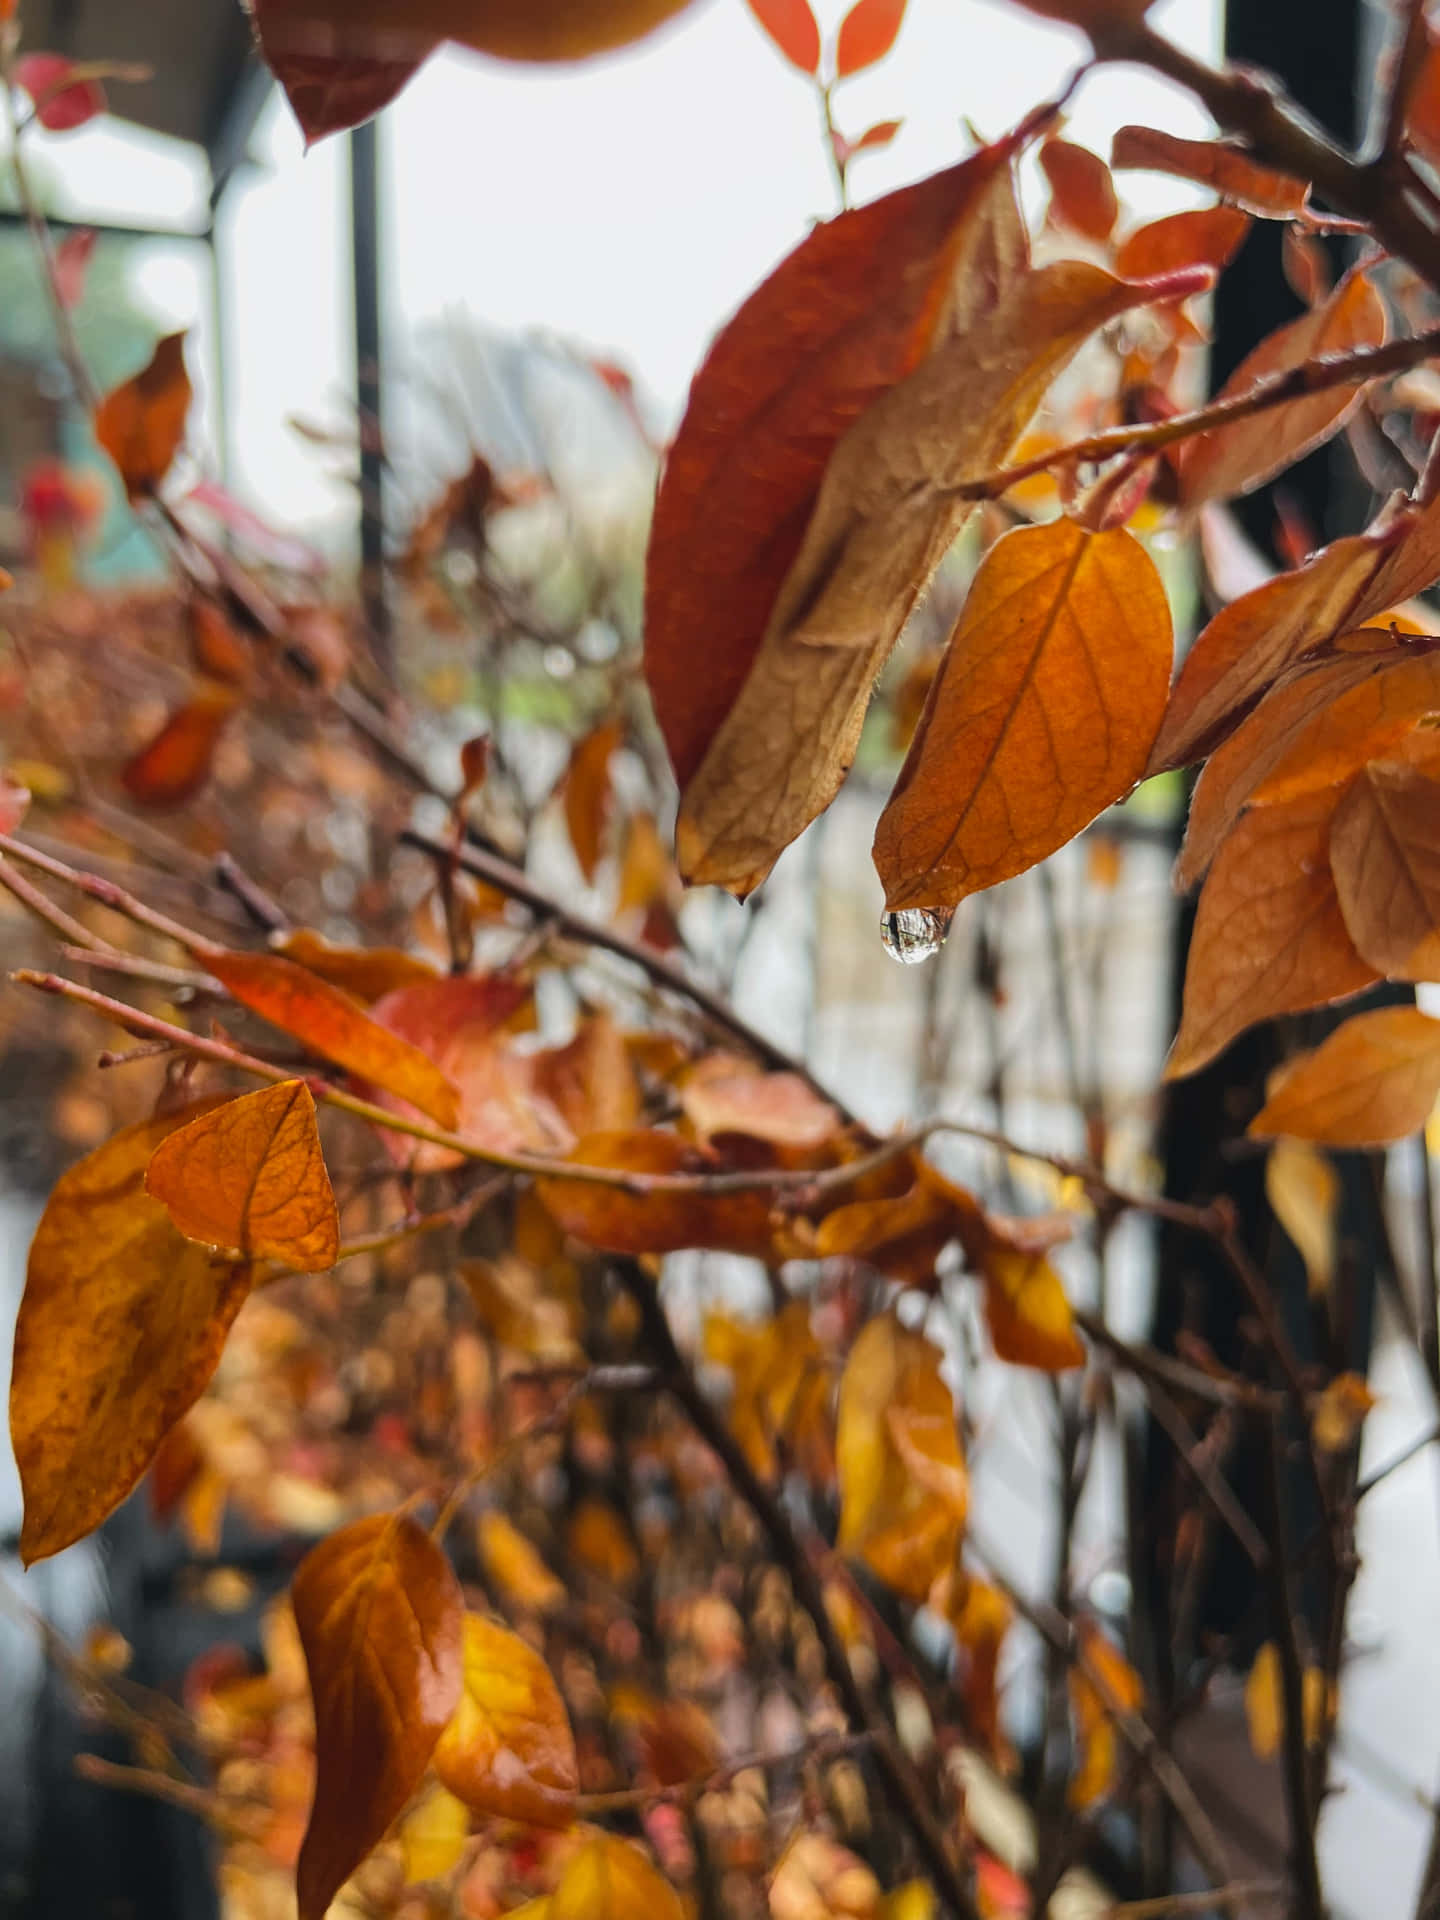 A scenic autumn view - raindrops glistening on colorful fall foliage. Wallpaper